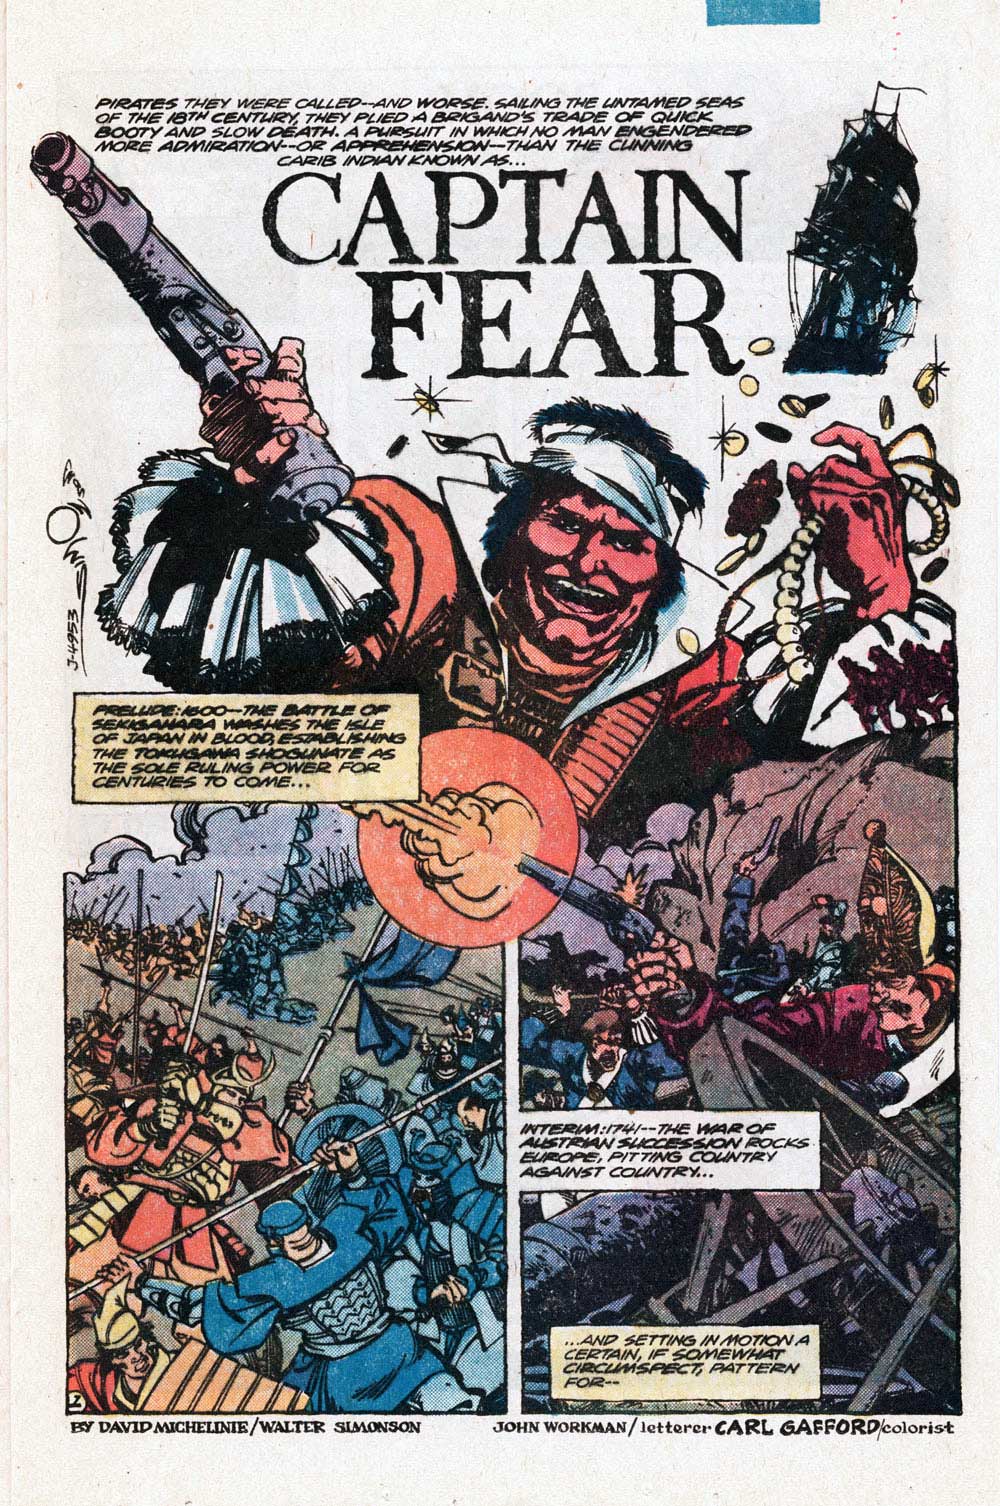 Unknown Soldier #254 (1981) by David Michelinie and Walt Simonson